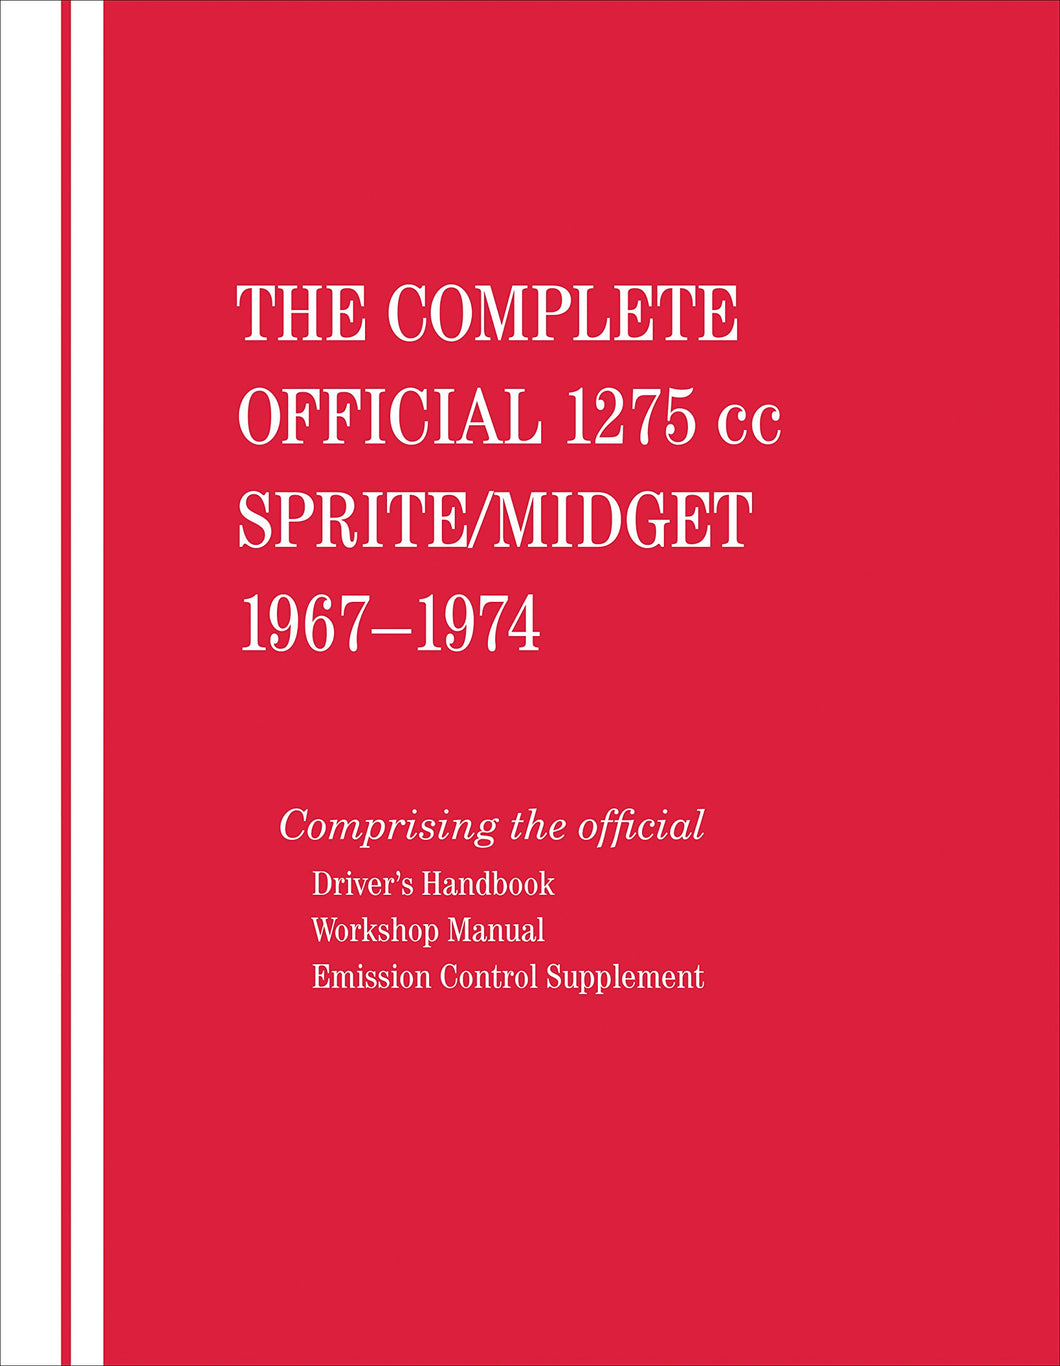 midget-The complete official MG Midget 1275: 1967-74